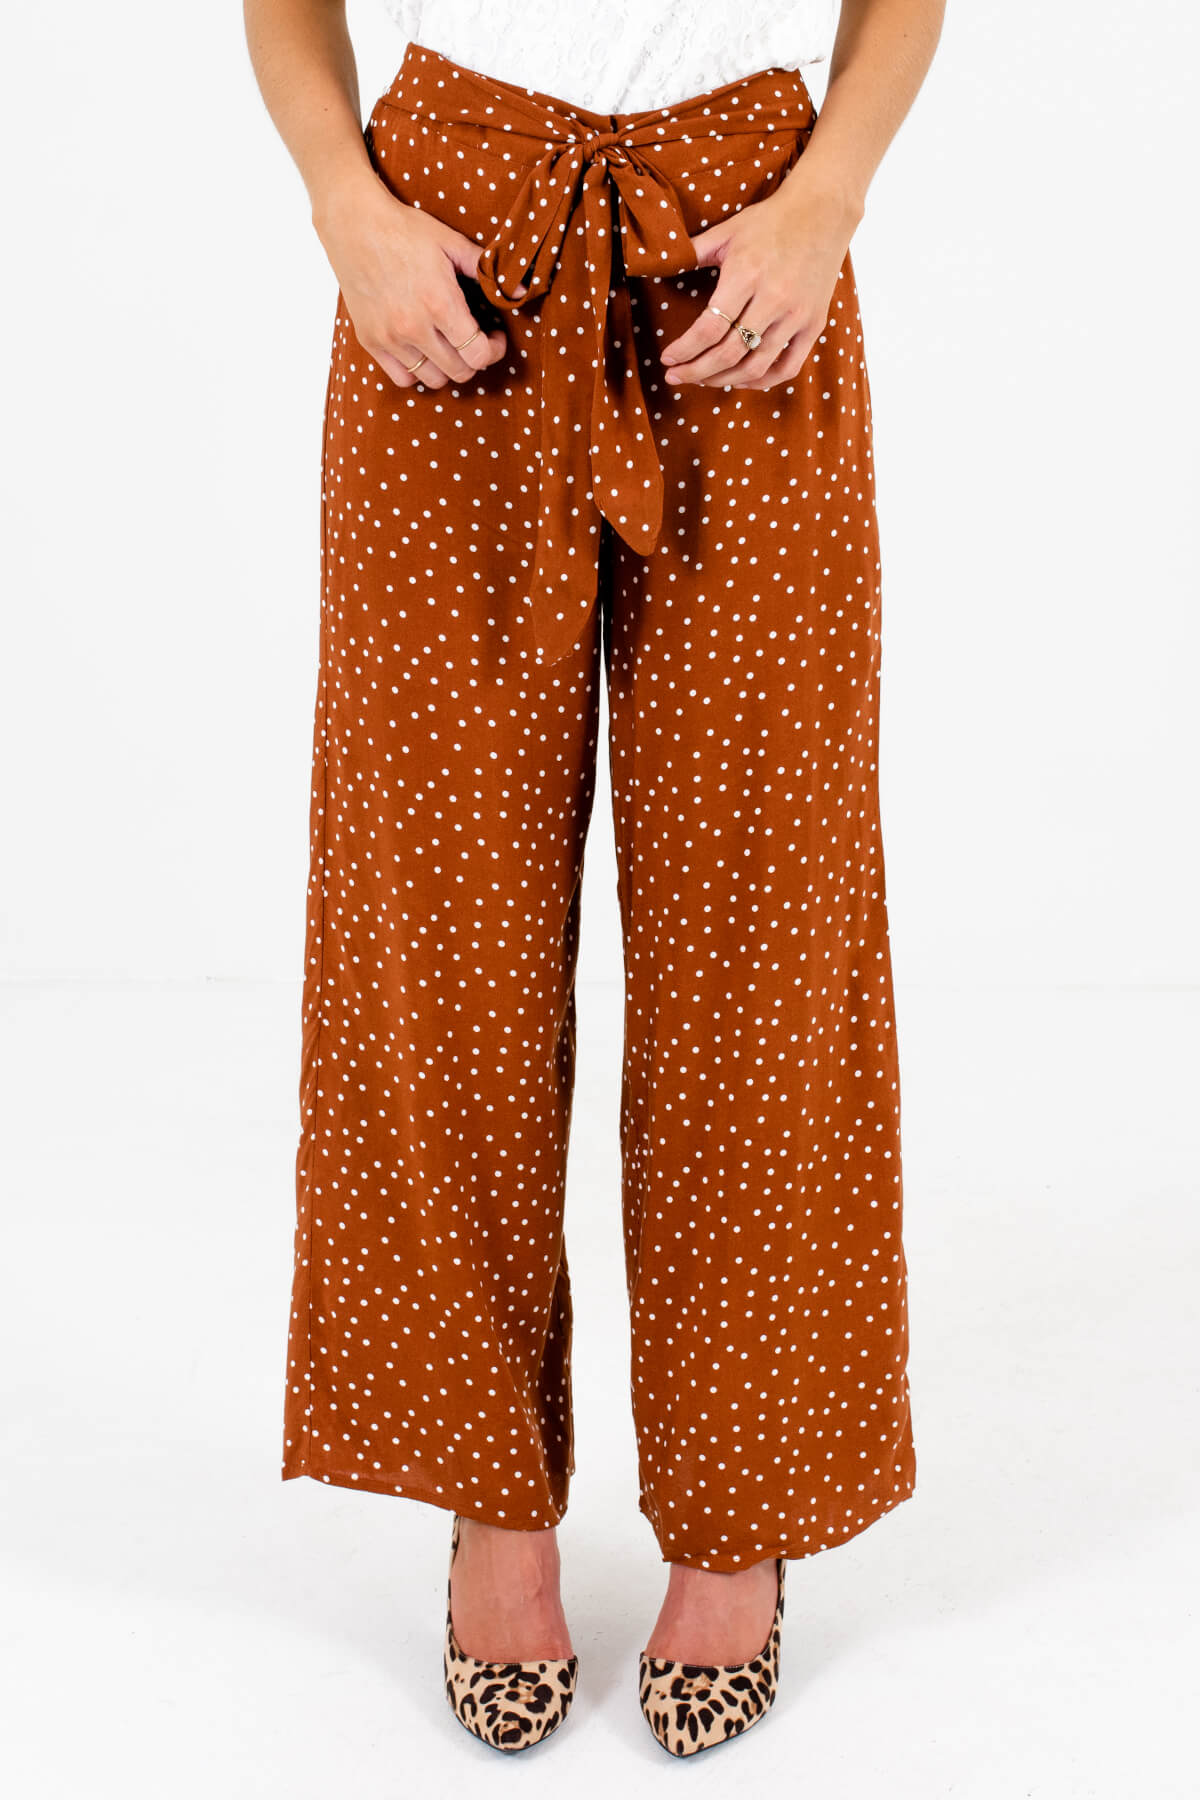 Rust Orange White Polka Dot Patterned Boutique Pants for Women